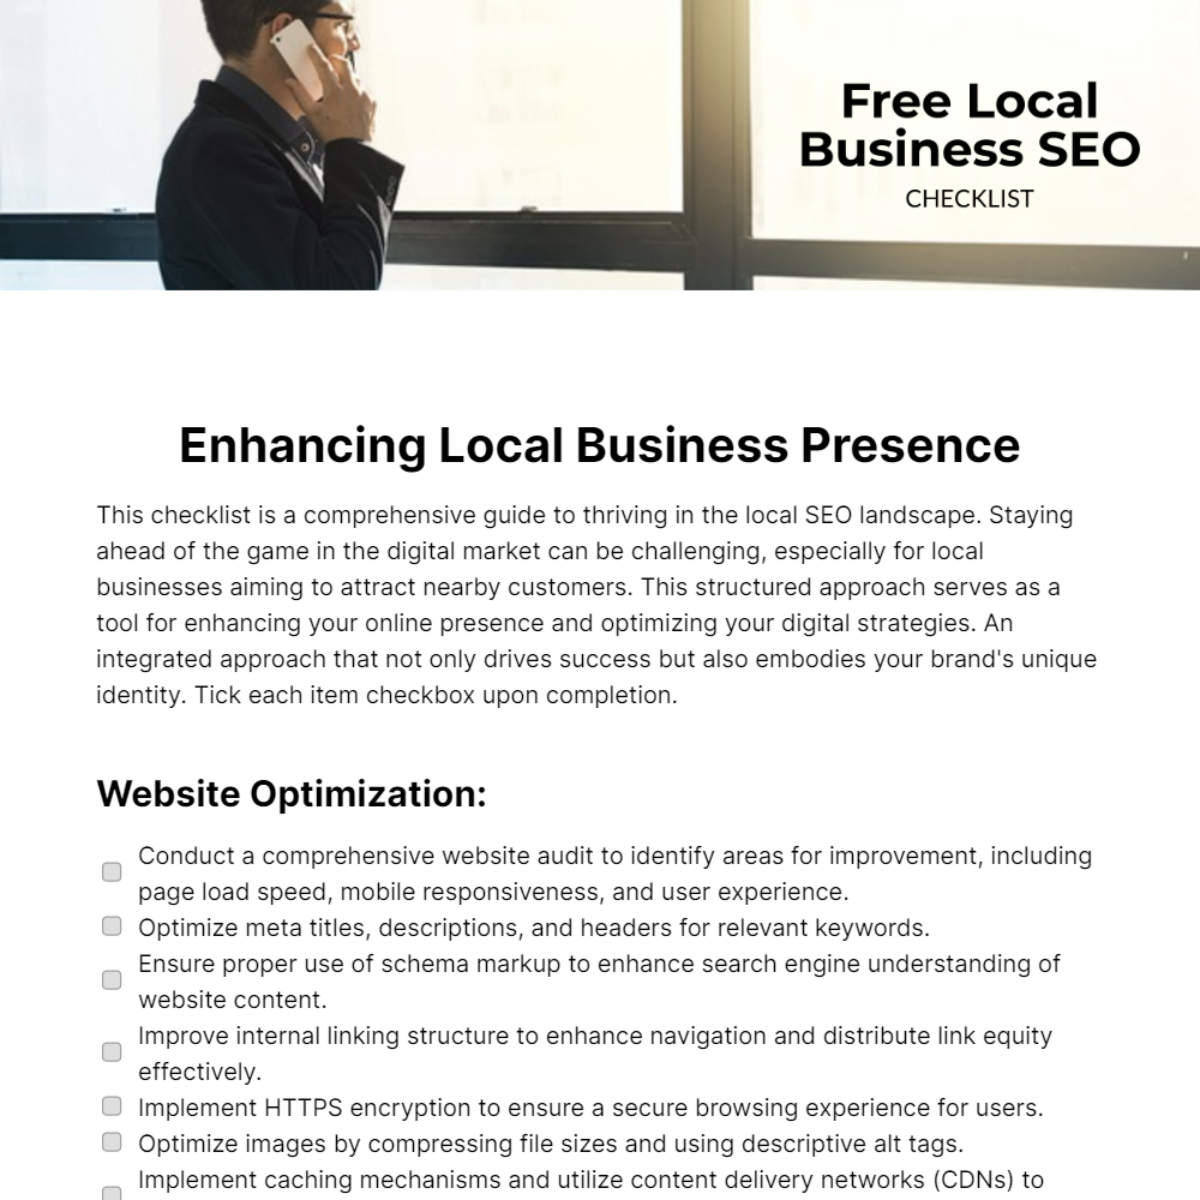 Free Local Business SEO Checklist Template